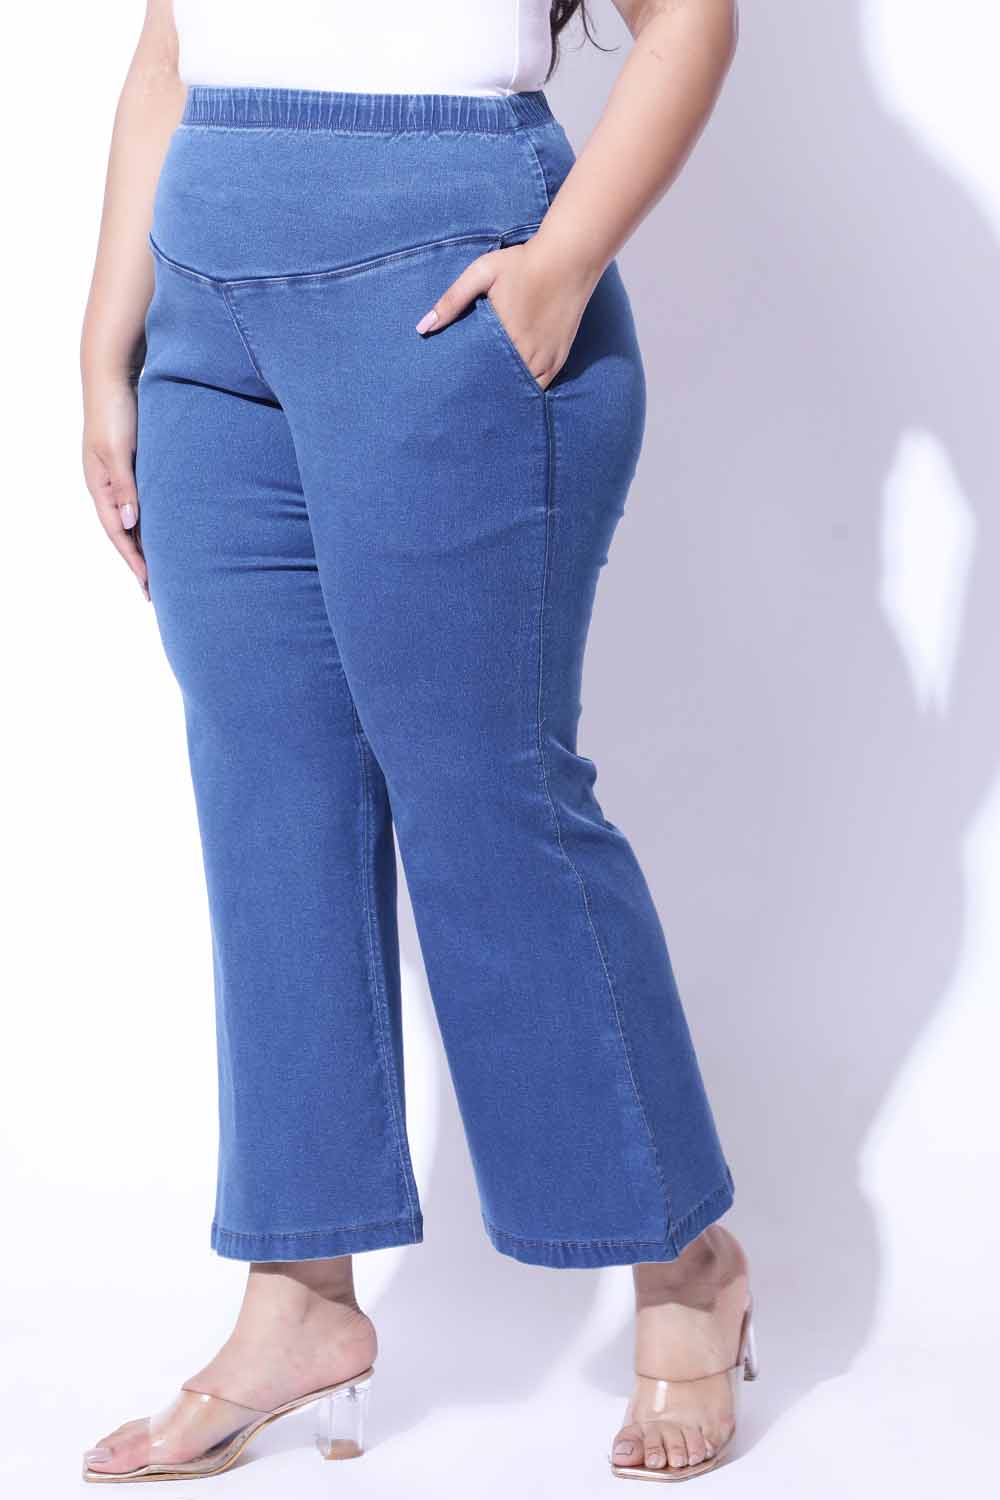 Bermuda Blue Flare Jeans for Women